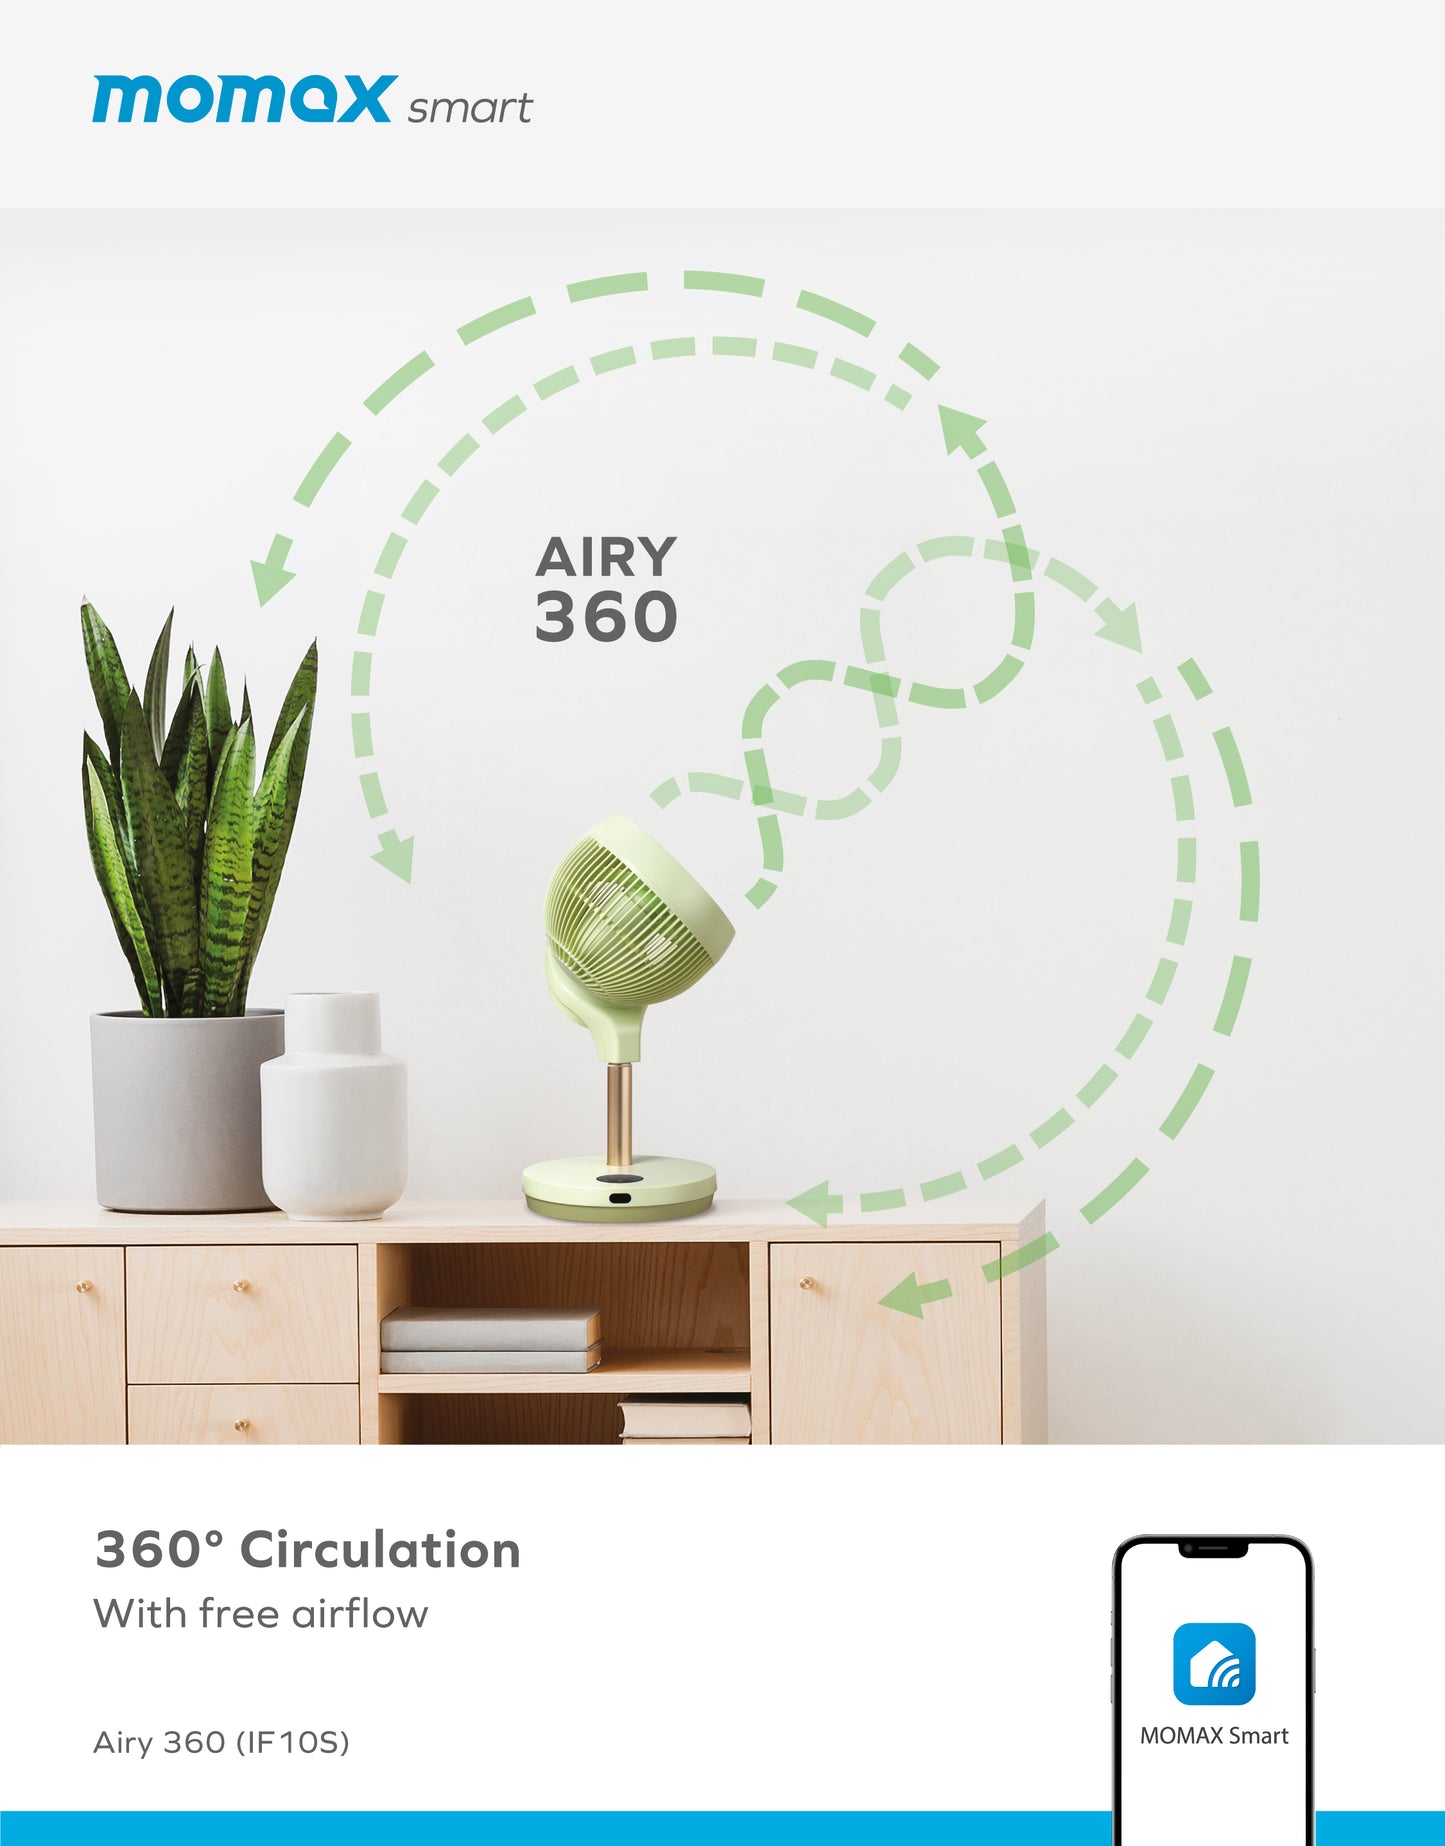 AIRY 360 IoT 2-way Anion Air Circulation Fan (IF10S) -- Circulation Fan